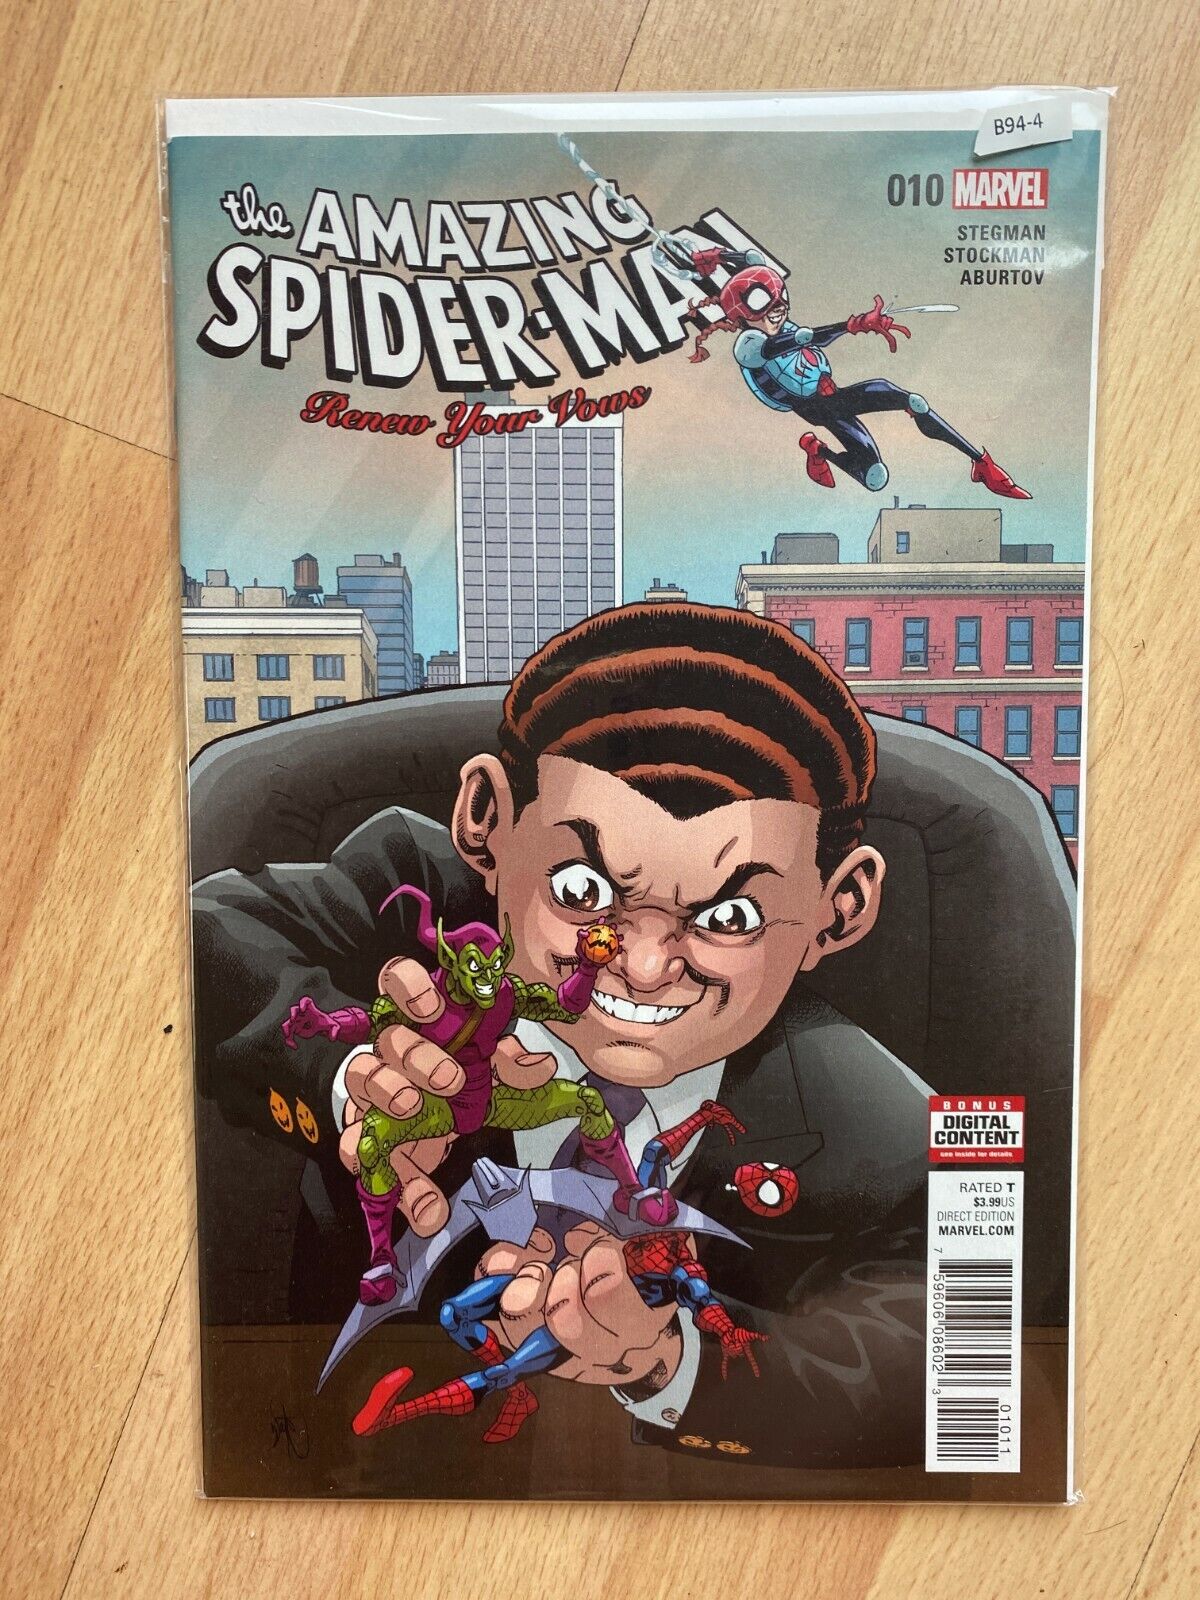 The Amazing Spider-Man 010 - High Grade Comic Book - B94-4